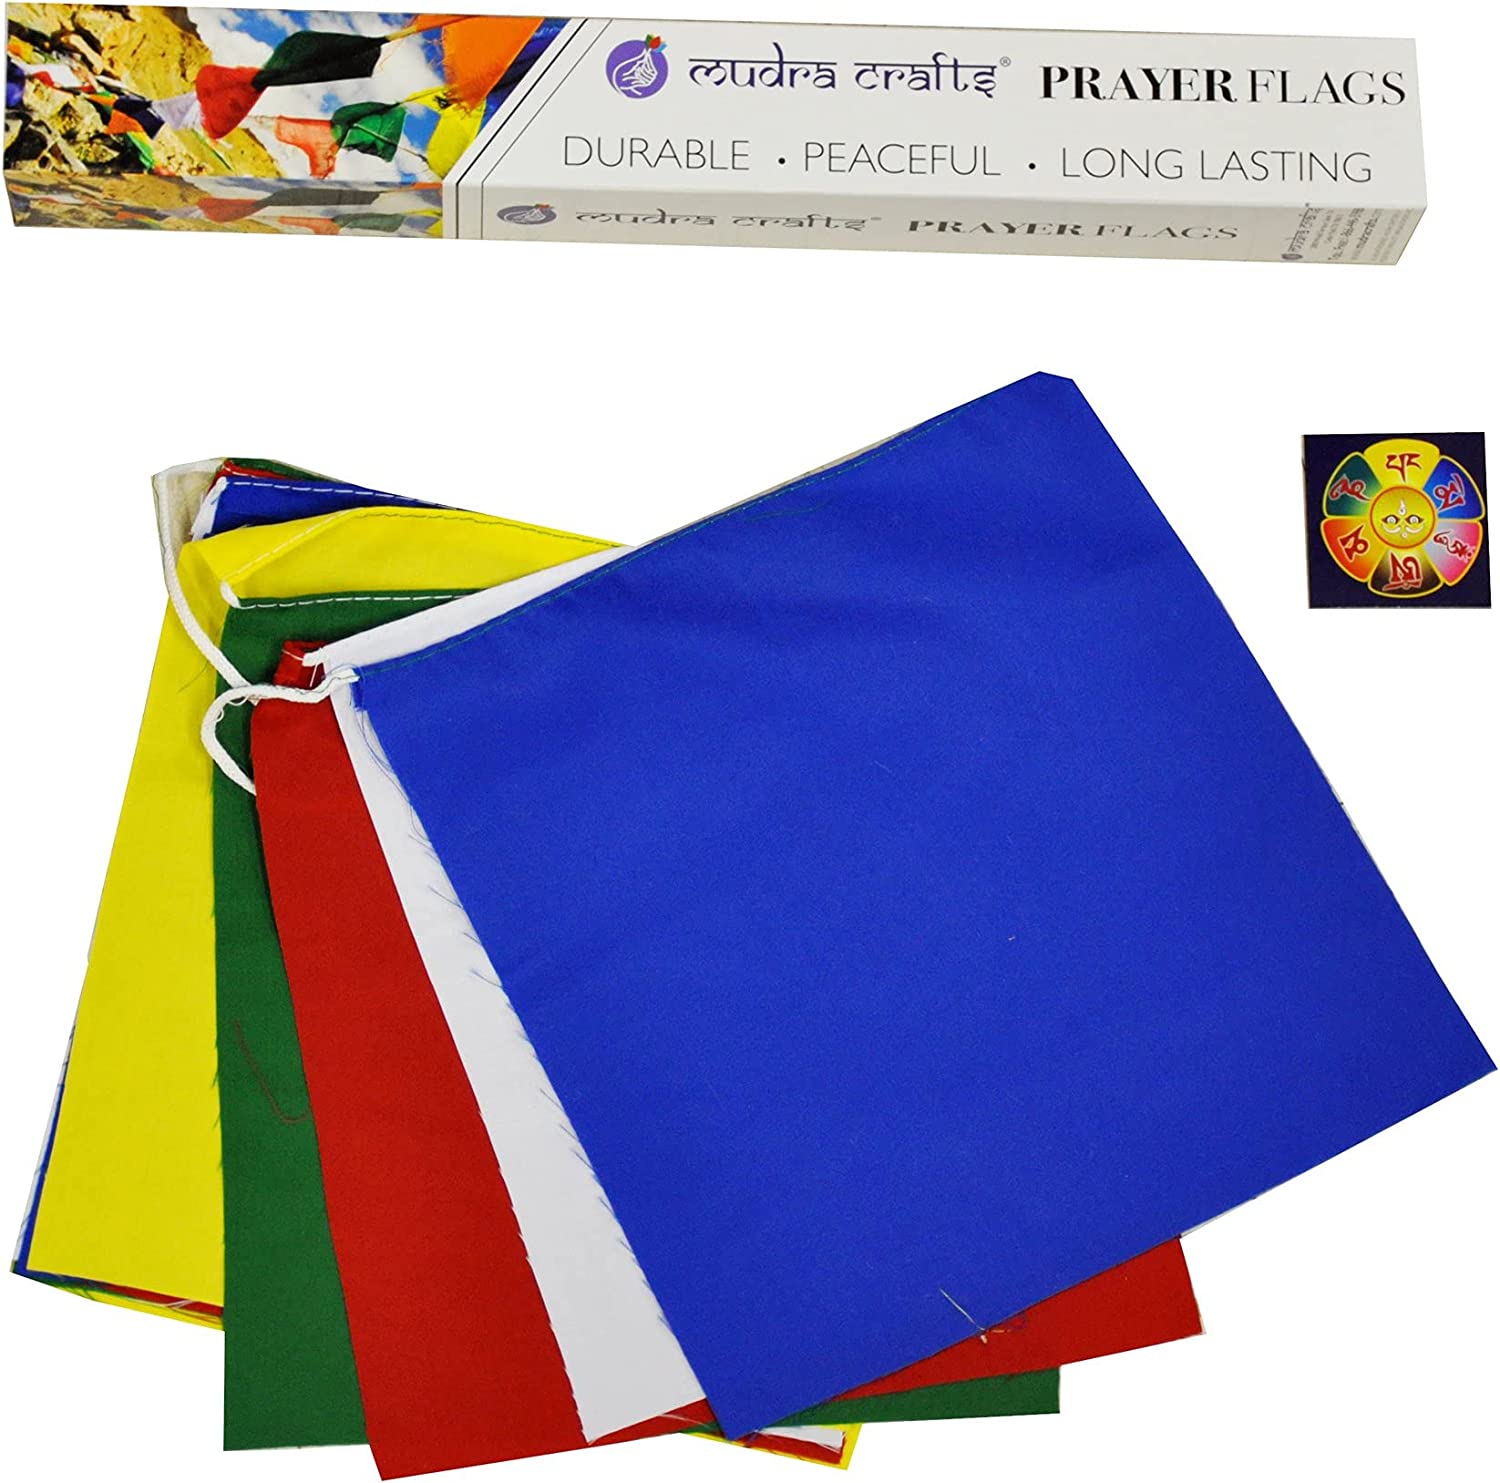 Mudra Crafts Large Tibetan Prayer Flags Outdoor Large Lungta - Nepalese Prayer Flags - Prayer Flag Banner Blank Prayer Flags